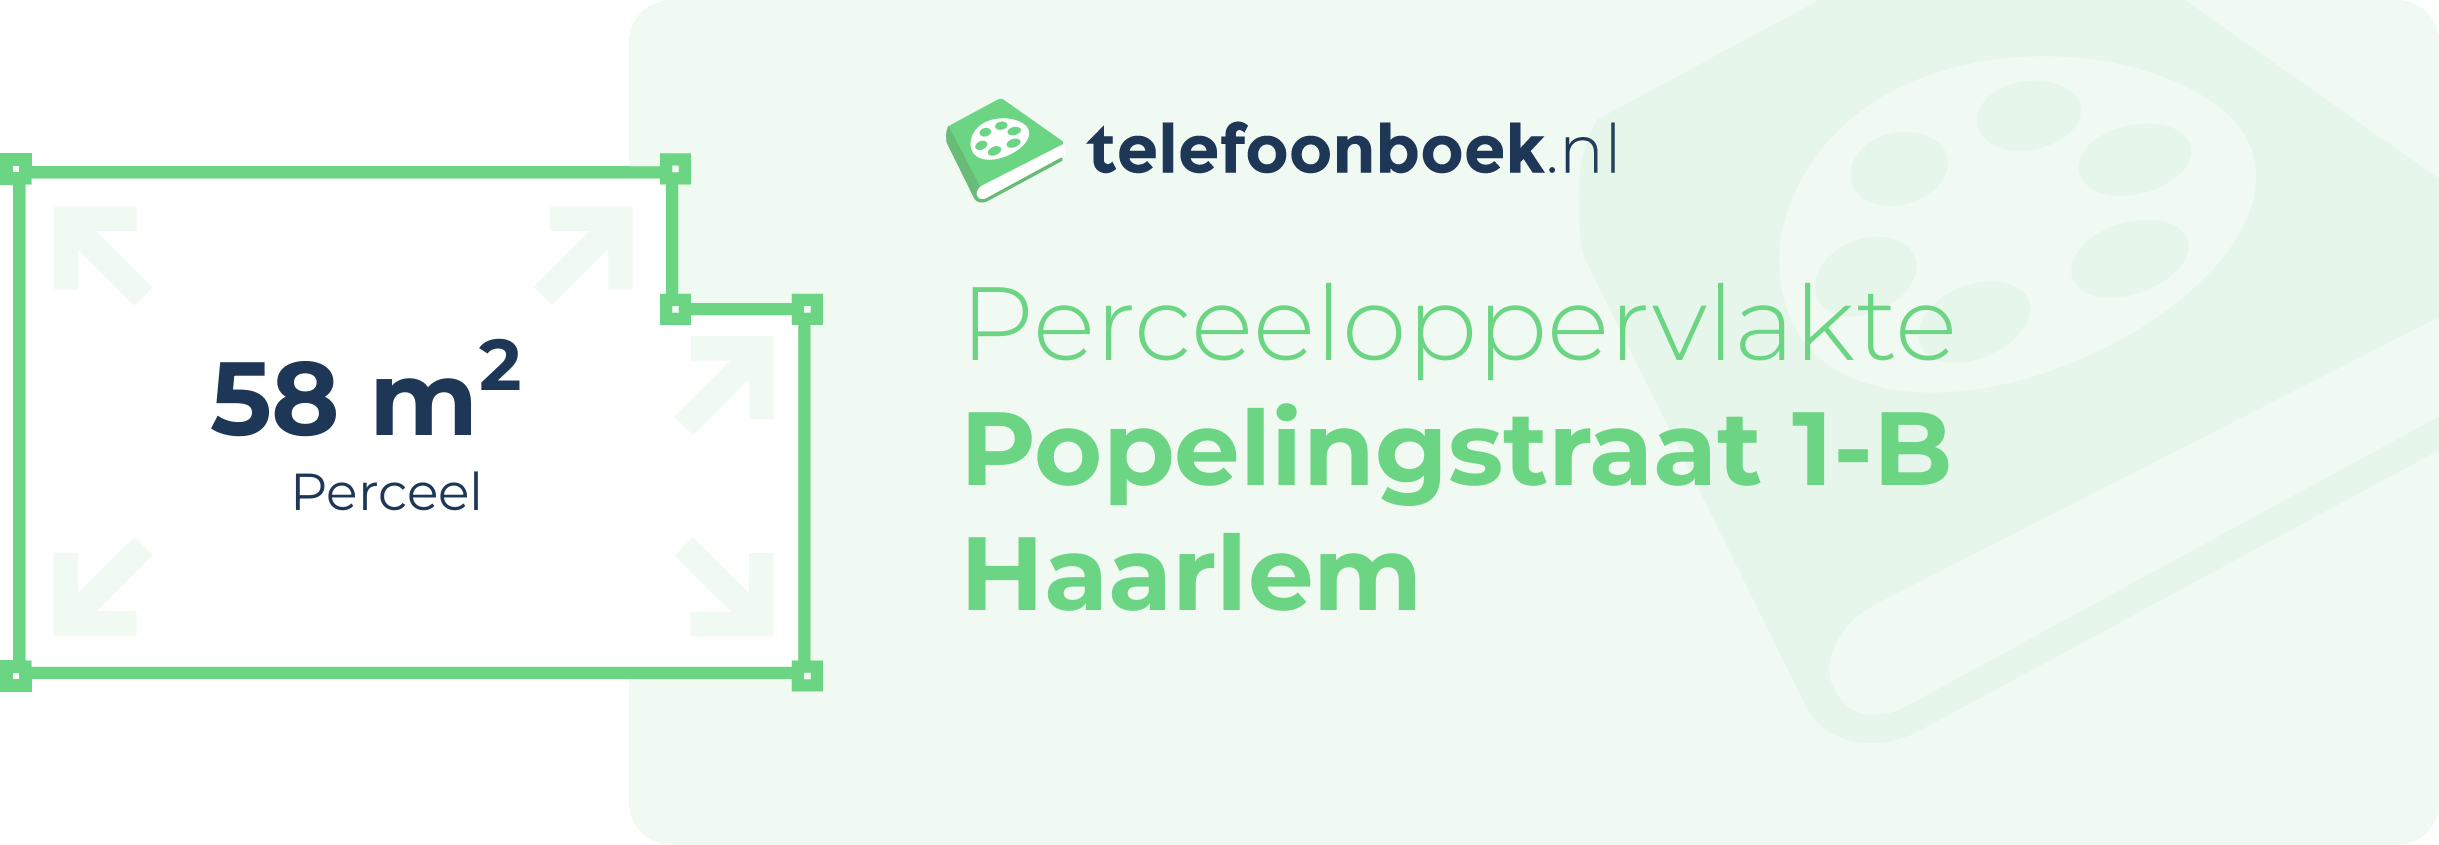 Perceeloppervlakte Popelingstraat 1-B Haarlem